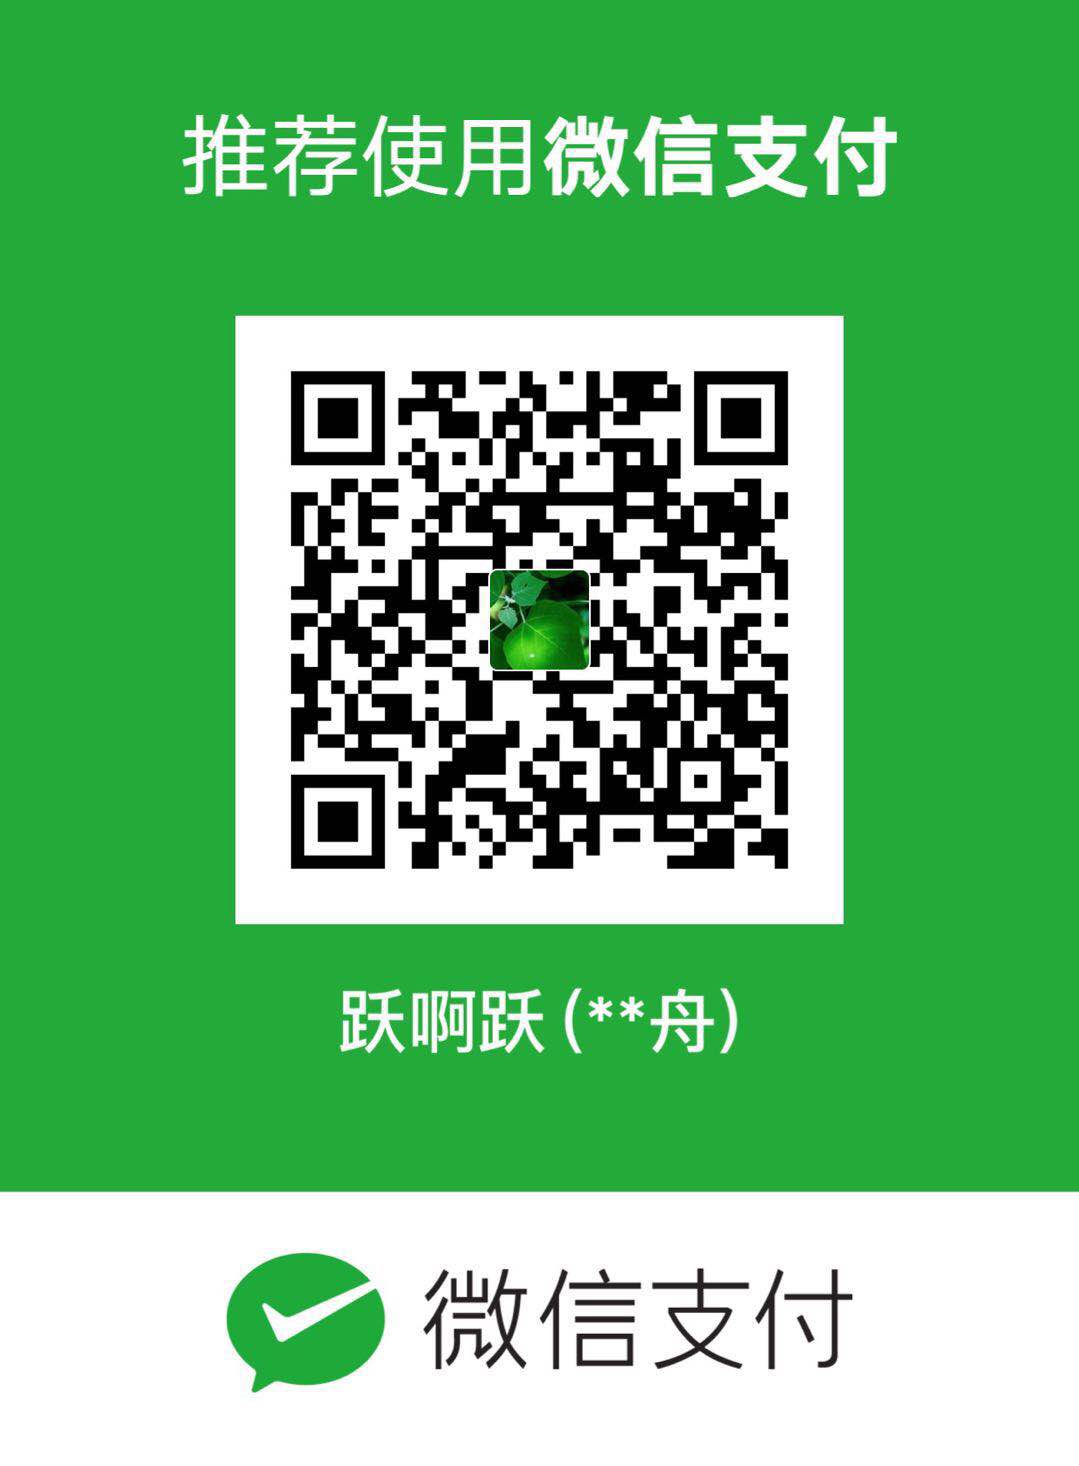 大船 WeChat Pay